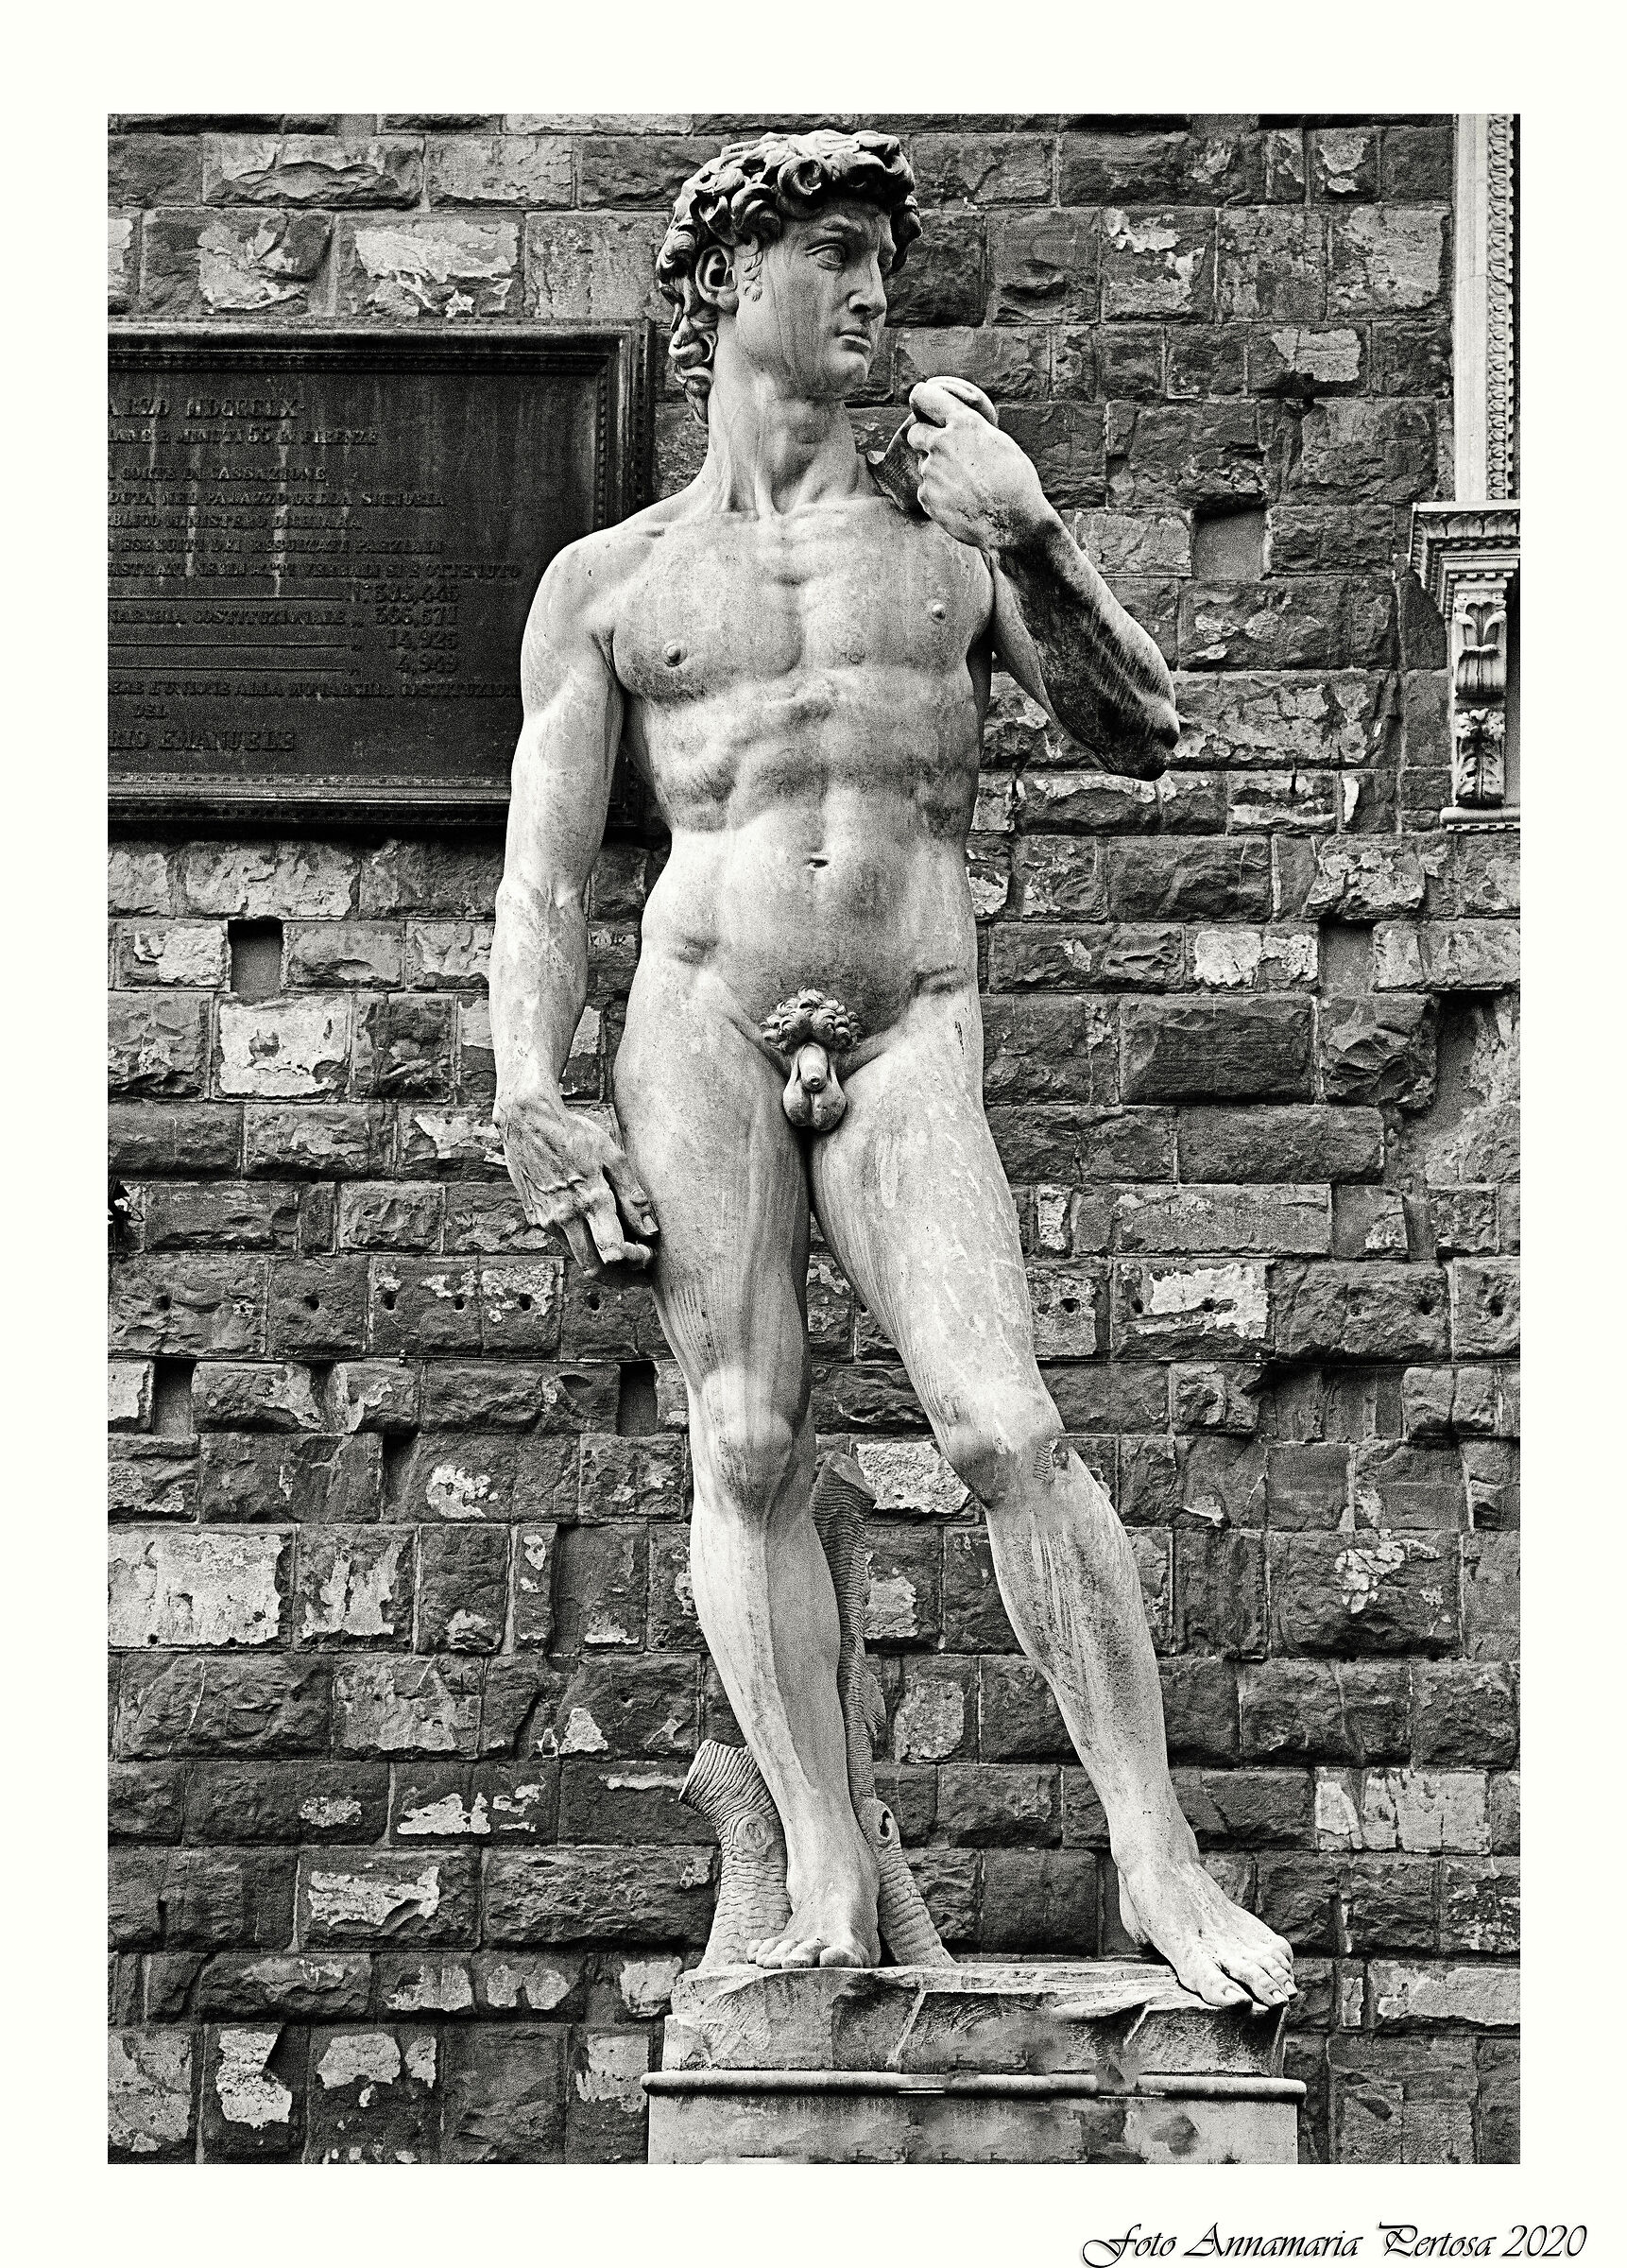 The True Story of Michelangelo's David...